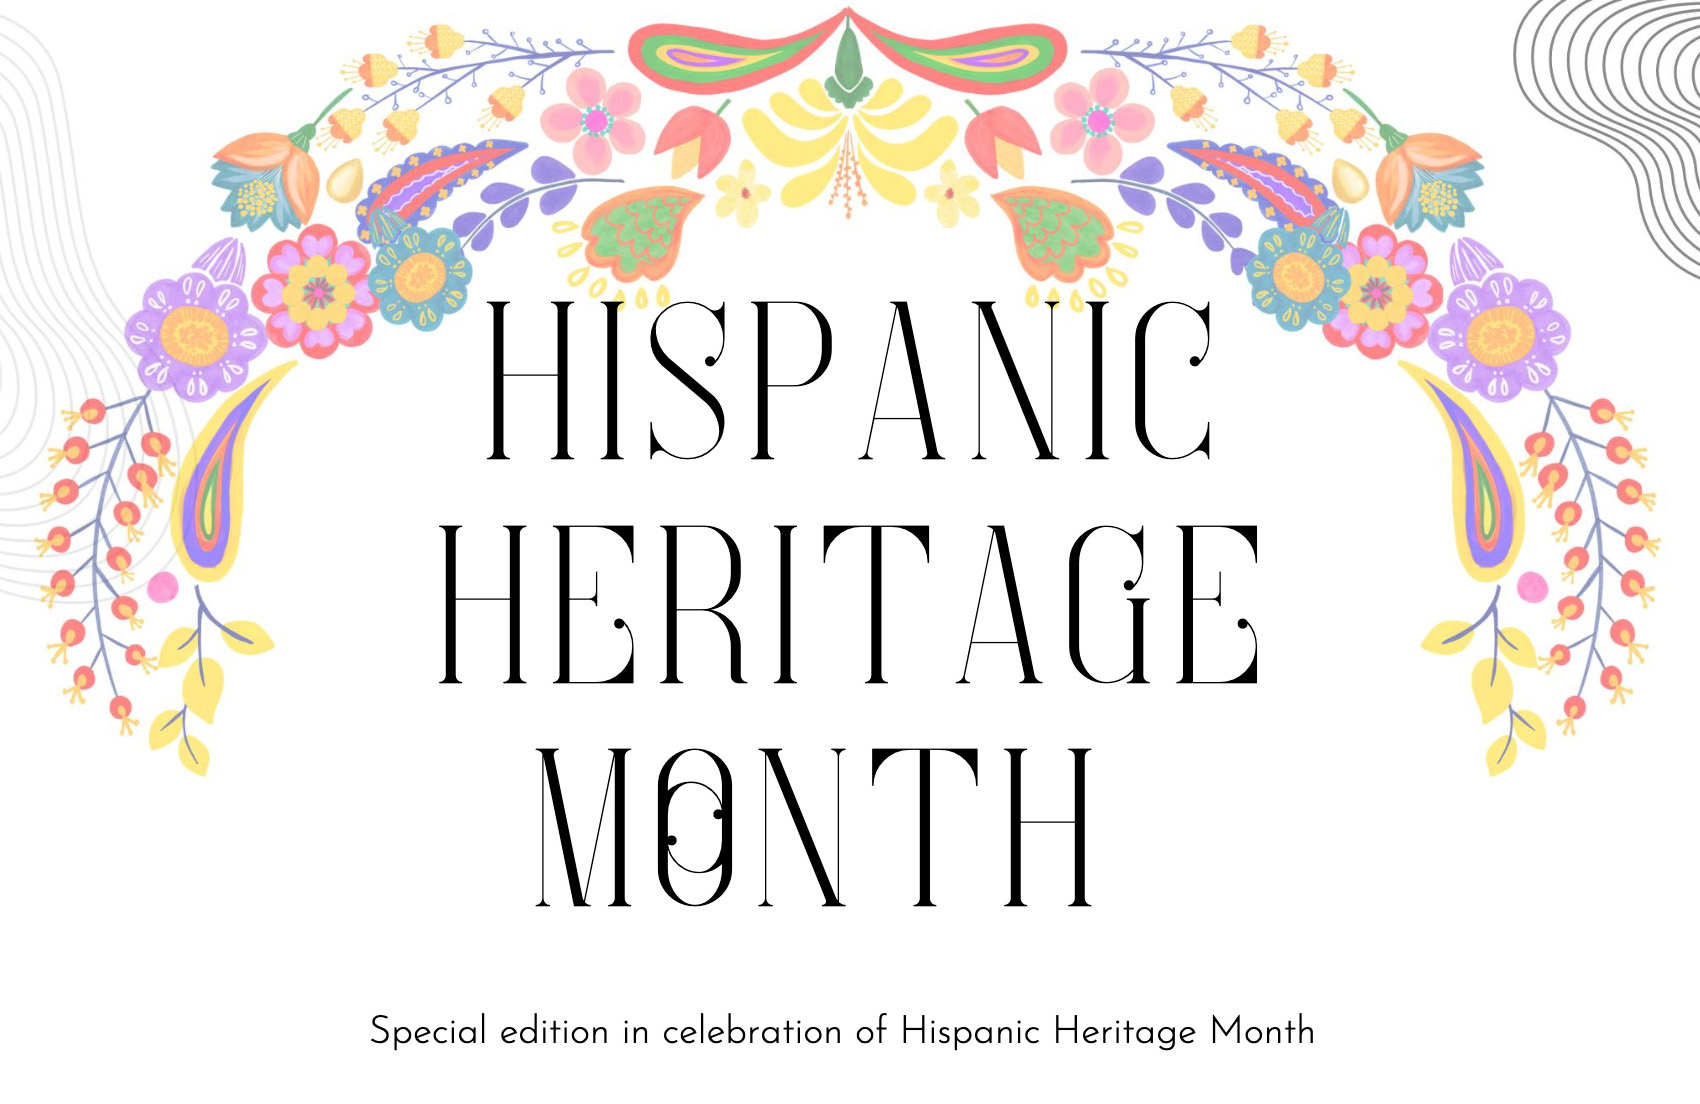 Hispanic Heritage Month Newsletter